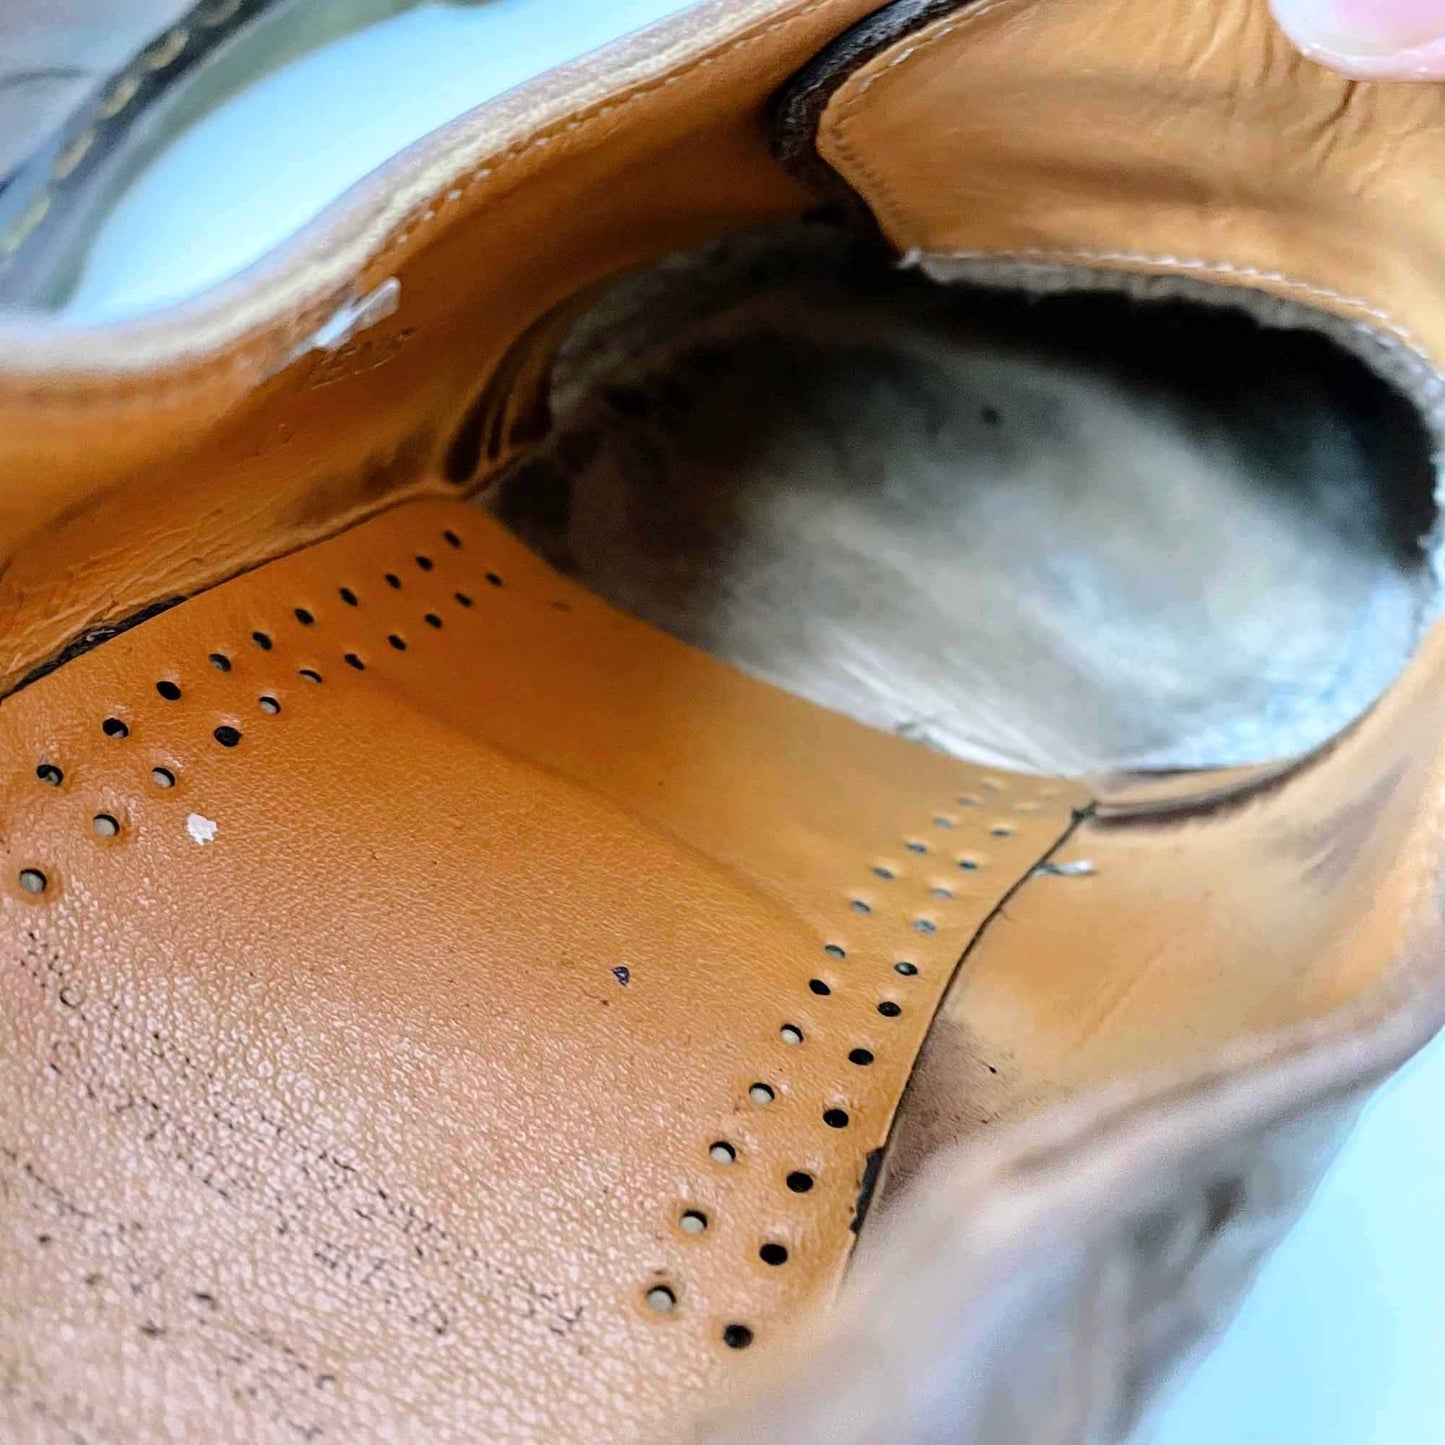 vintage 90's women's doc martens leather oxford shoes - size 10